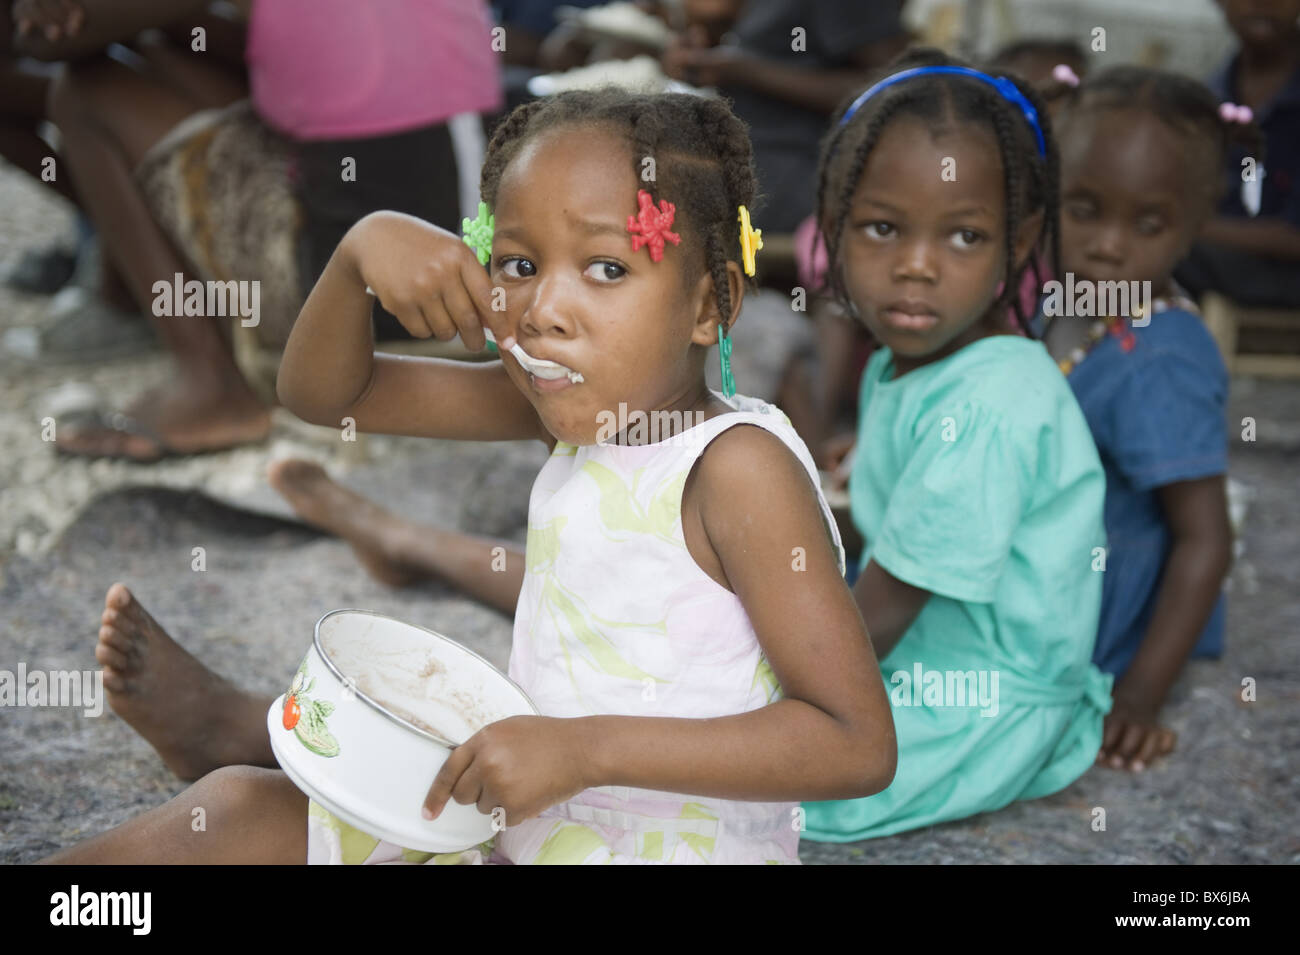 Waisenkinder in einem Waisenhaus nach dem Erdbeben im Januar 2010, Port au Prince, Haiti, West Indies, Karibik, Mittelamerika Stockfoto